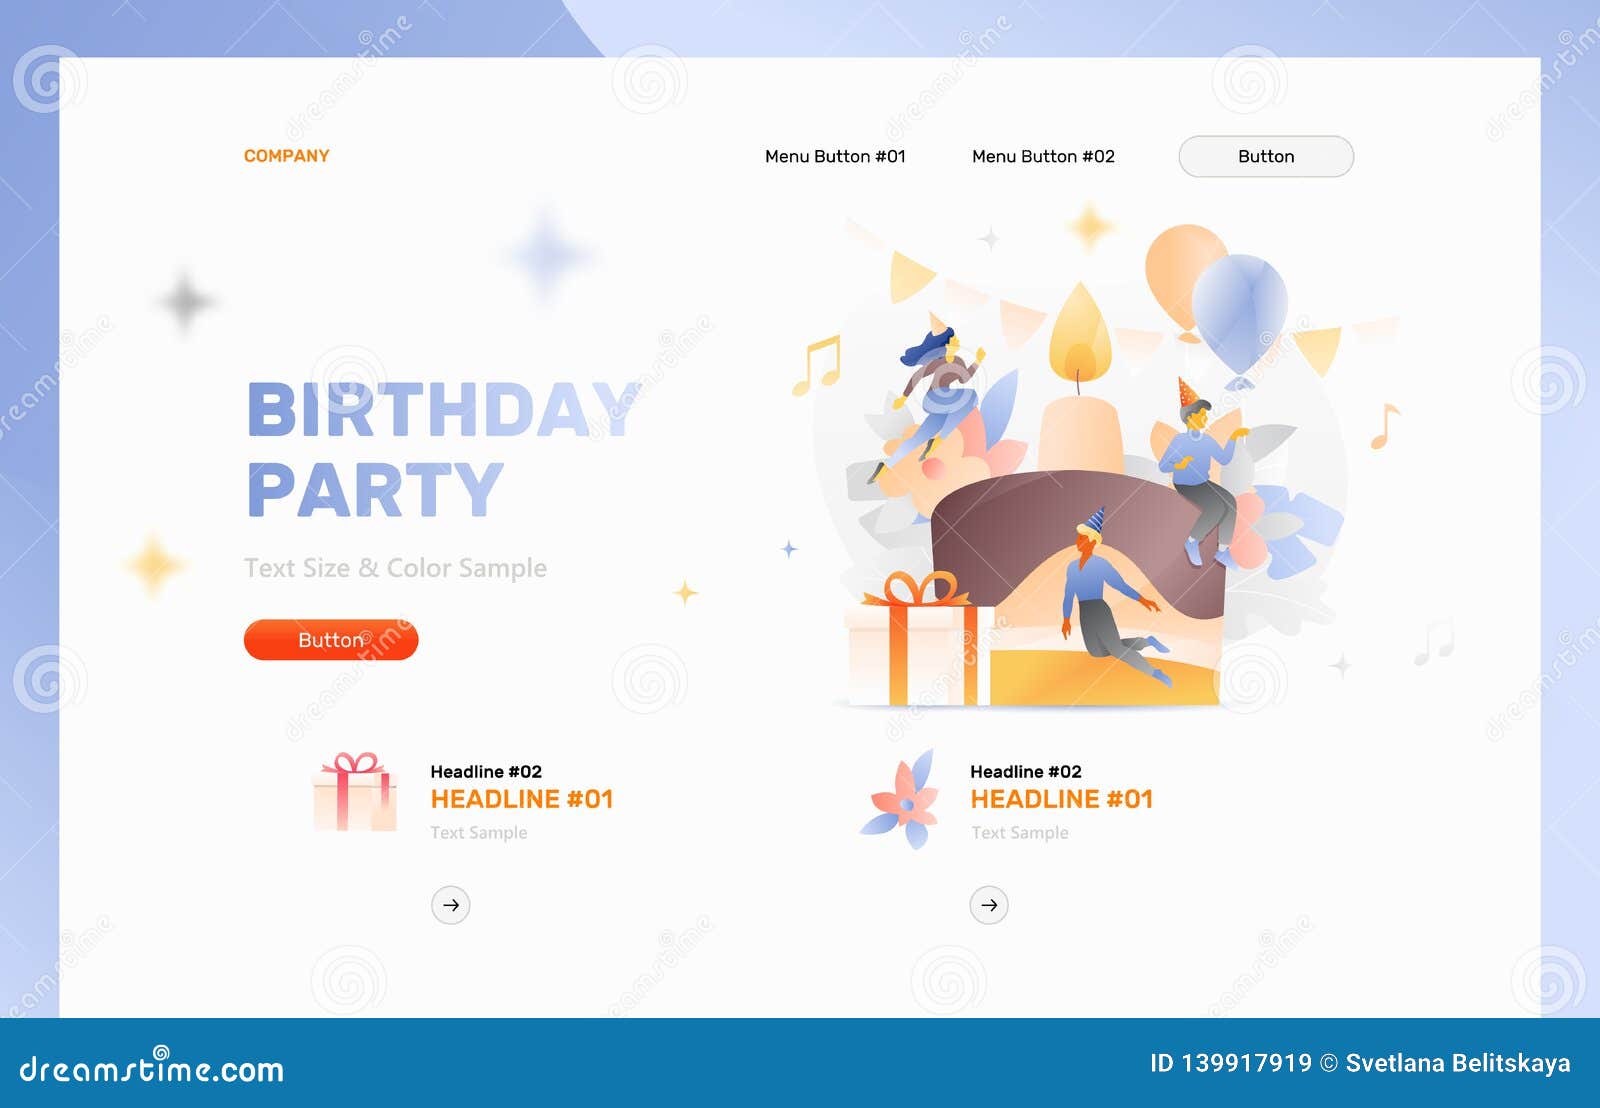 Birthday Party Website Header Template Stock Vector Illustration of